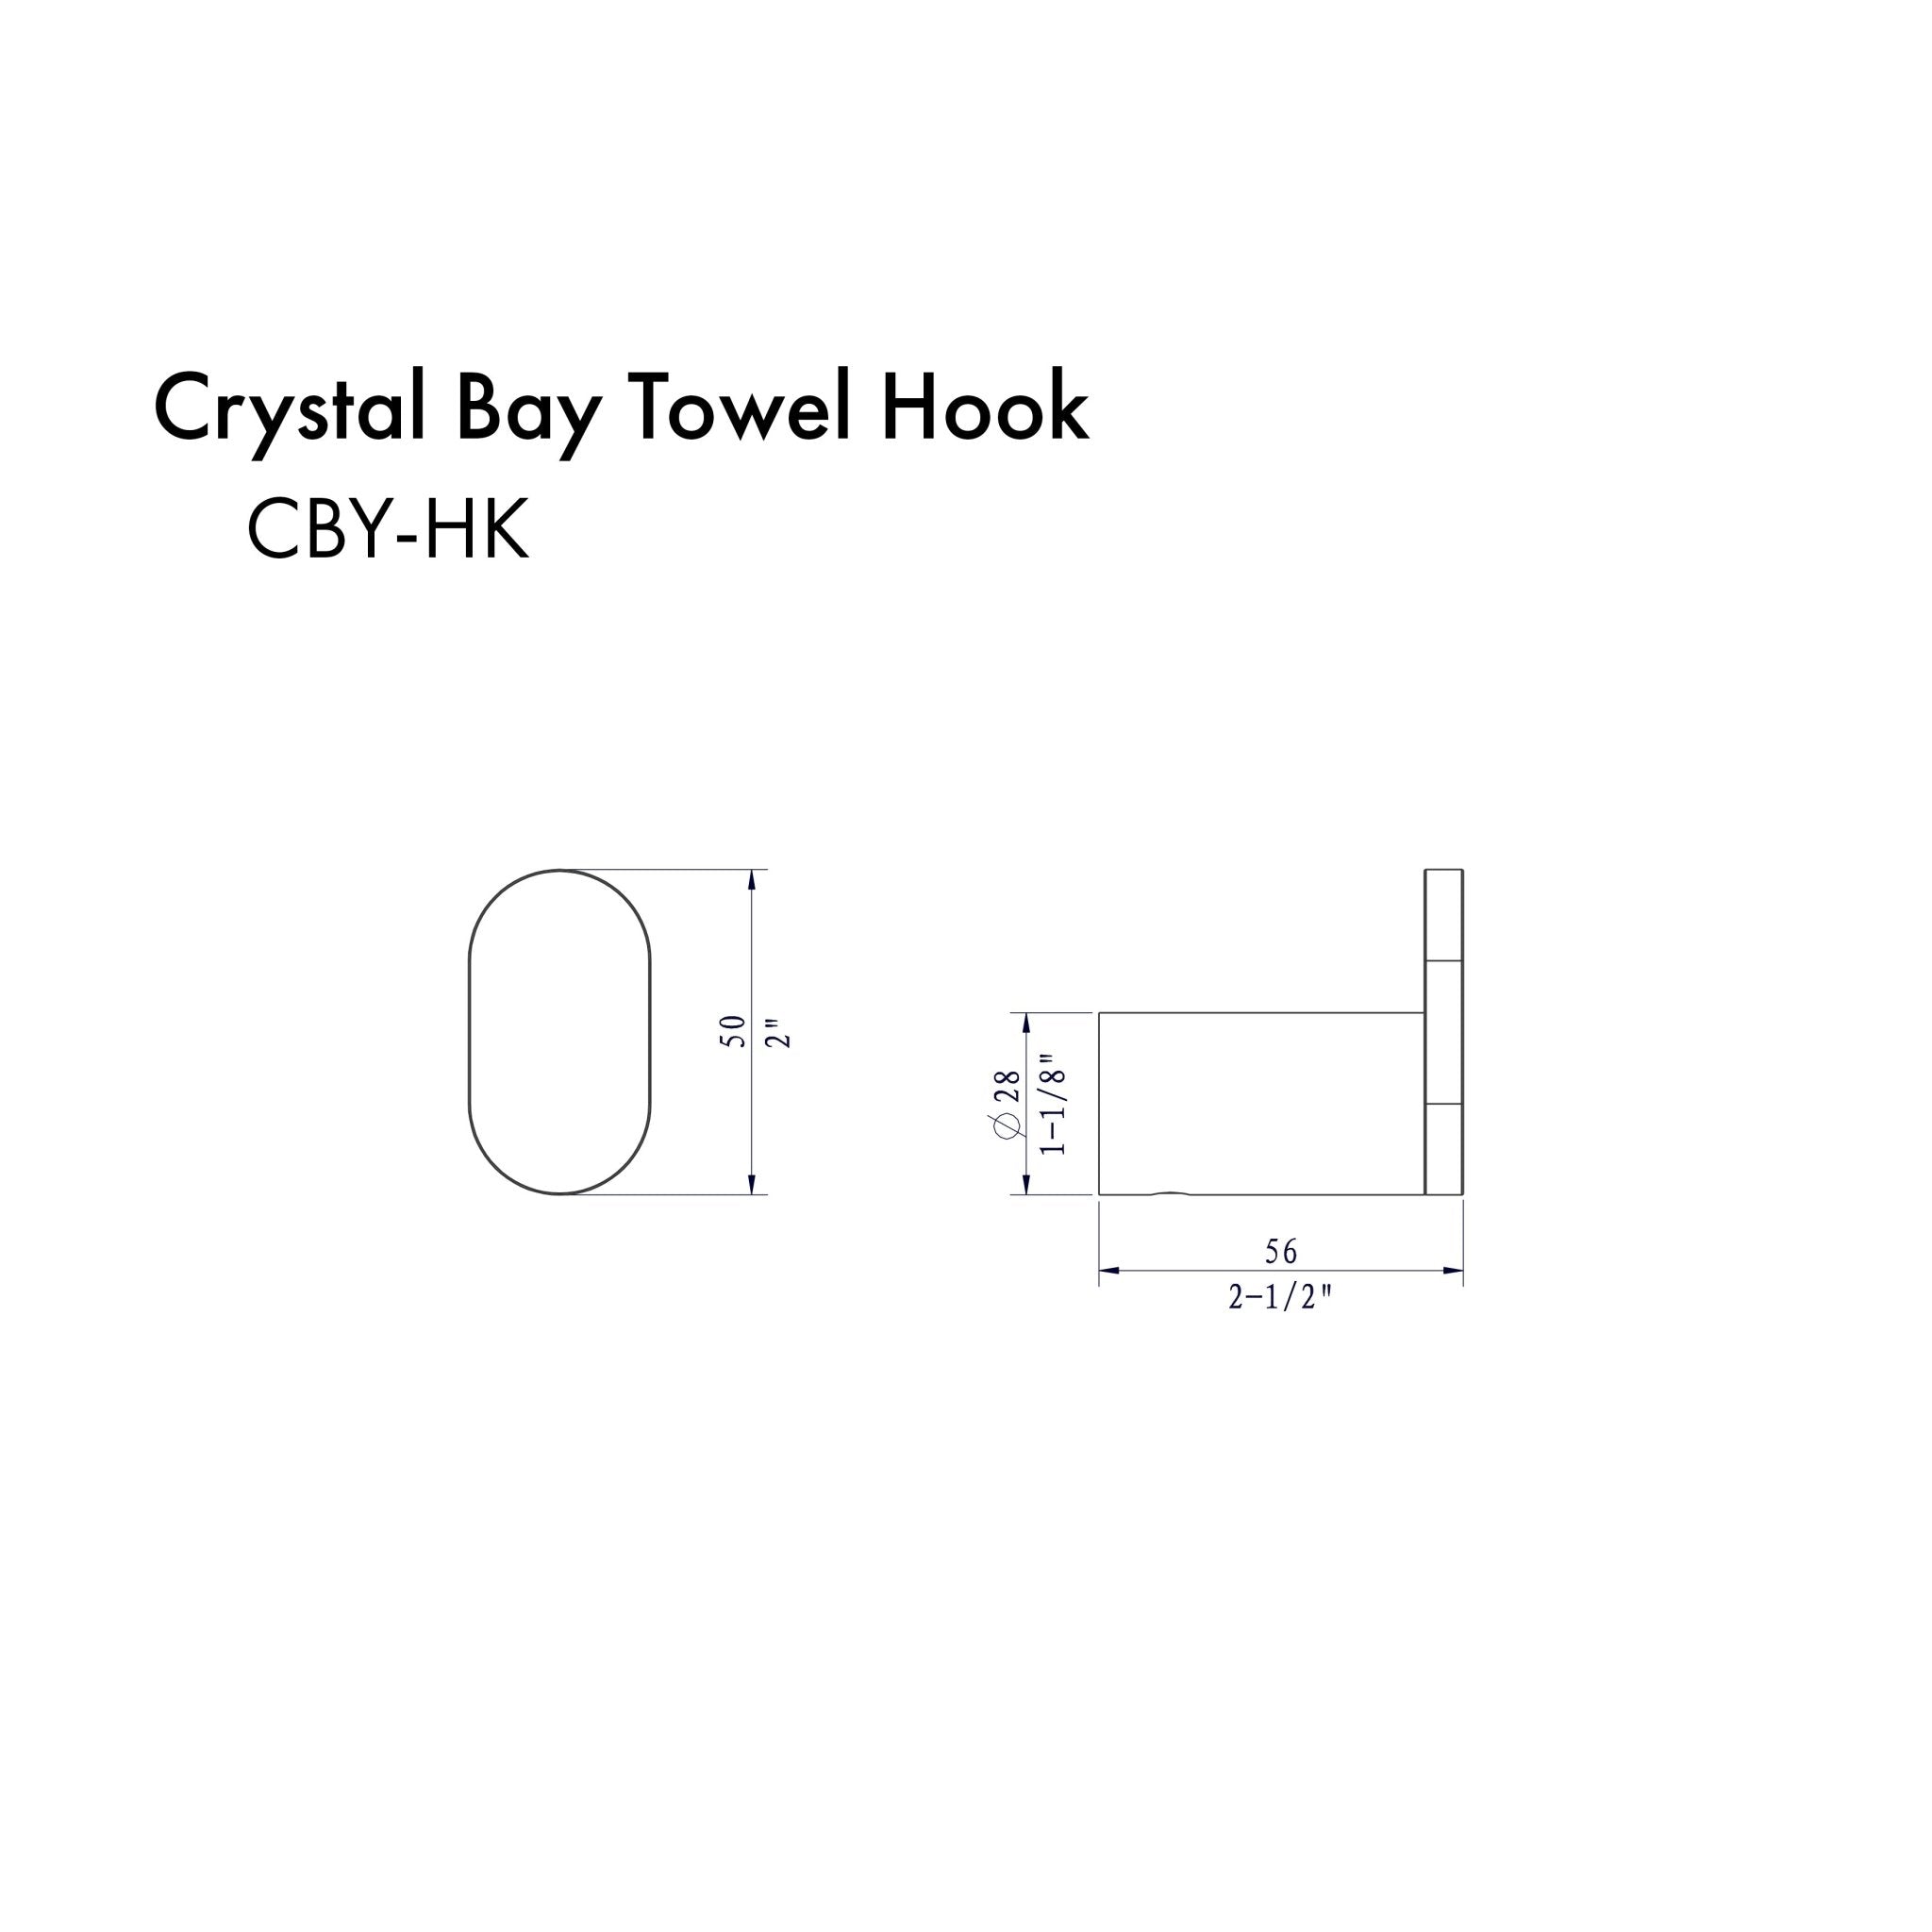 ZLINE Crystal Bay Towel Hook dimensions